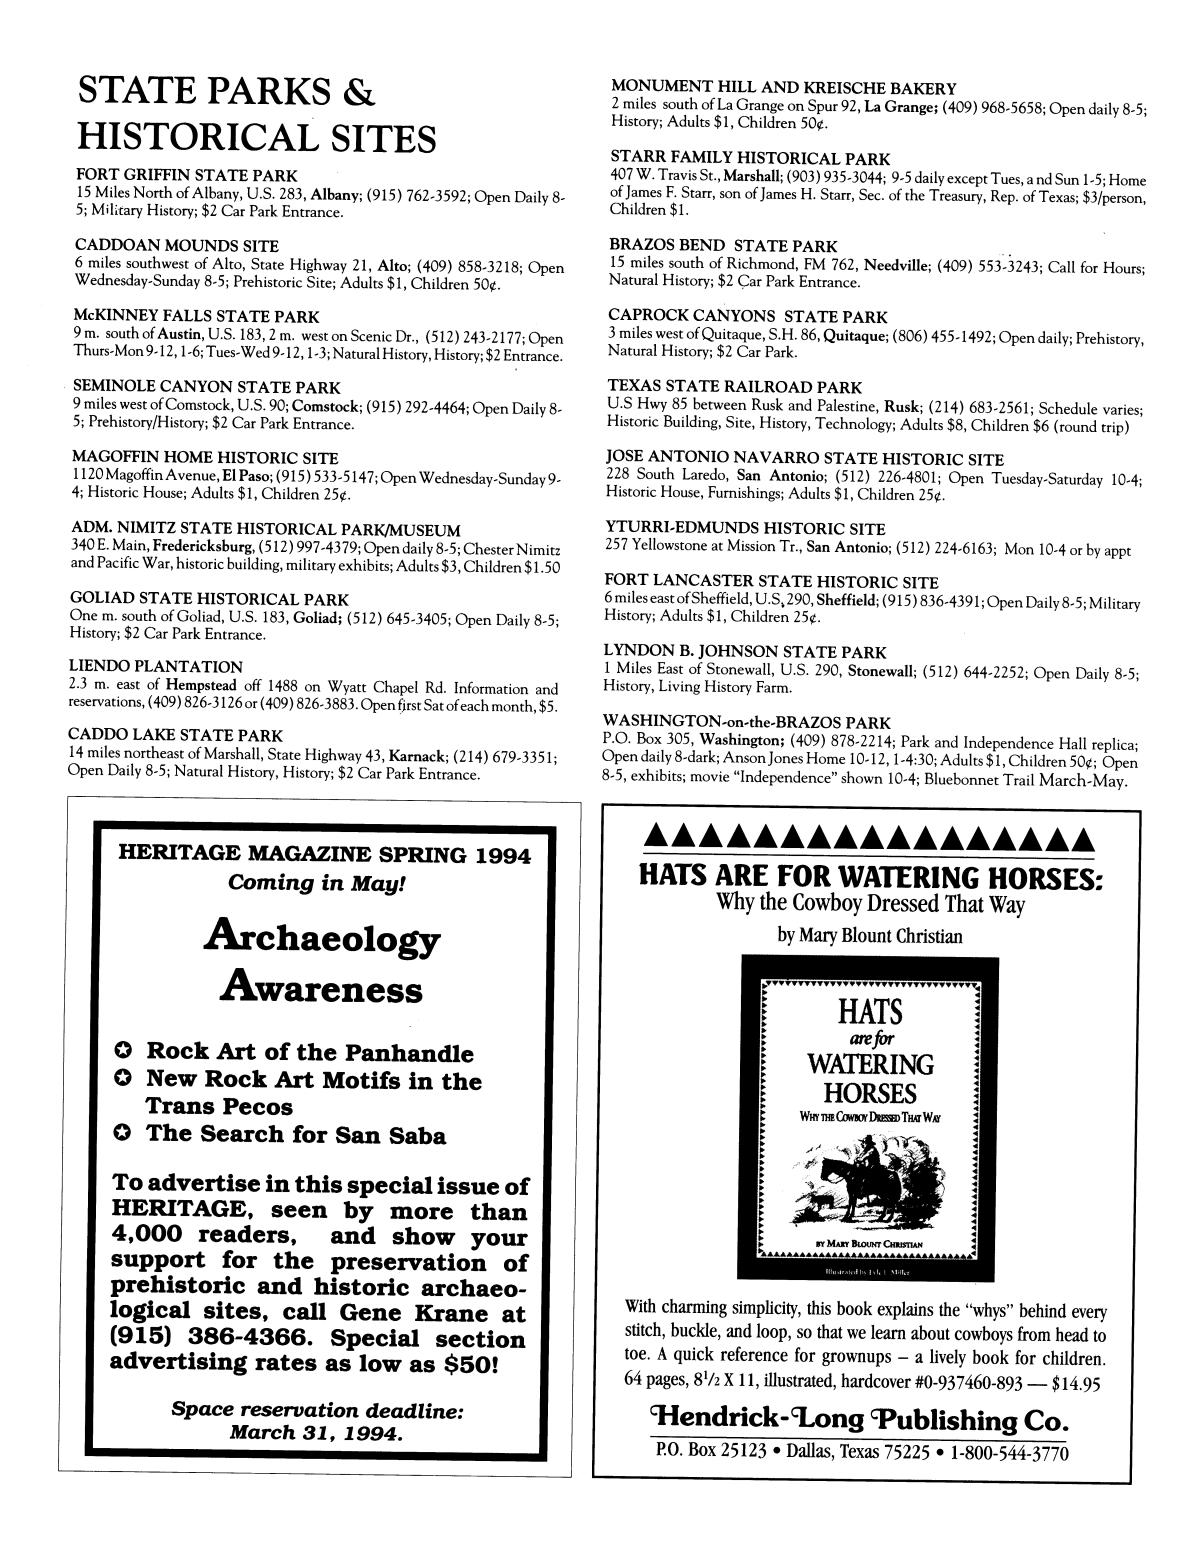 Heritage, Volume 12, Number 1, Winter 1994
                                                
                                                    27
                                                